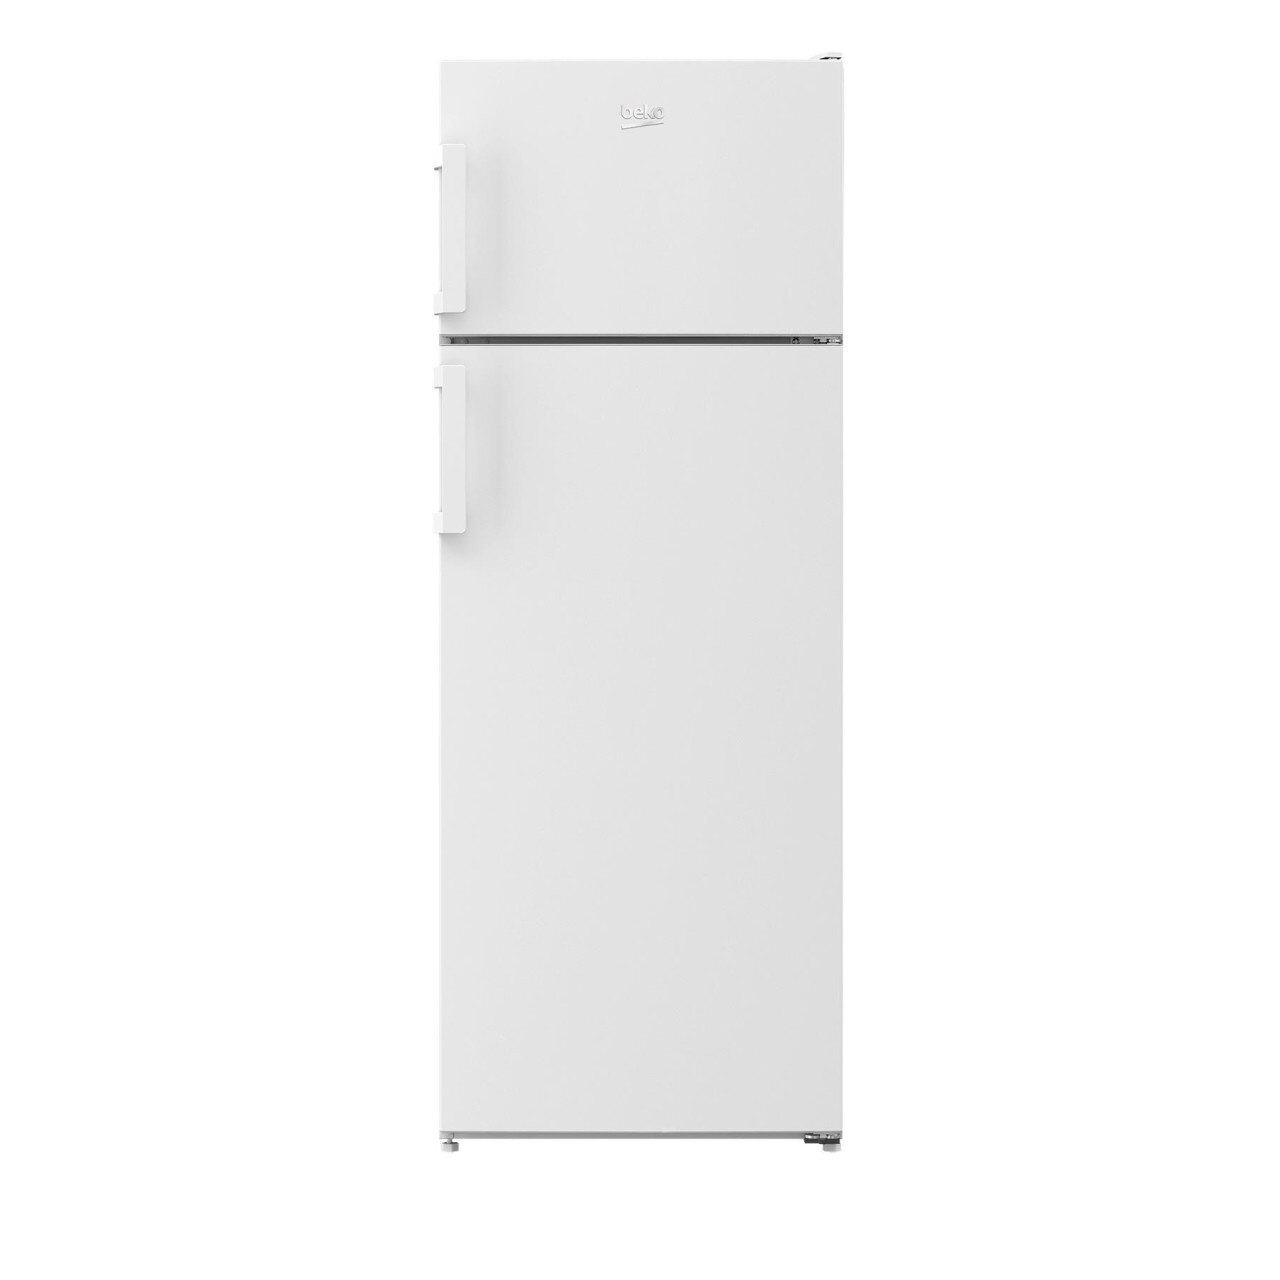 Сток холодильника. Холодильник Beko no Frost. Холодильник Beko RDSA 290m20 w. Холодильник Сток. Холодильник Grundig.